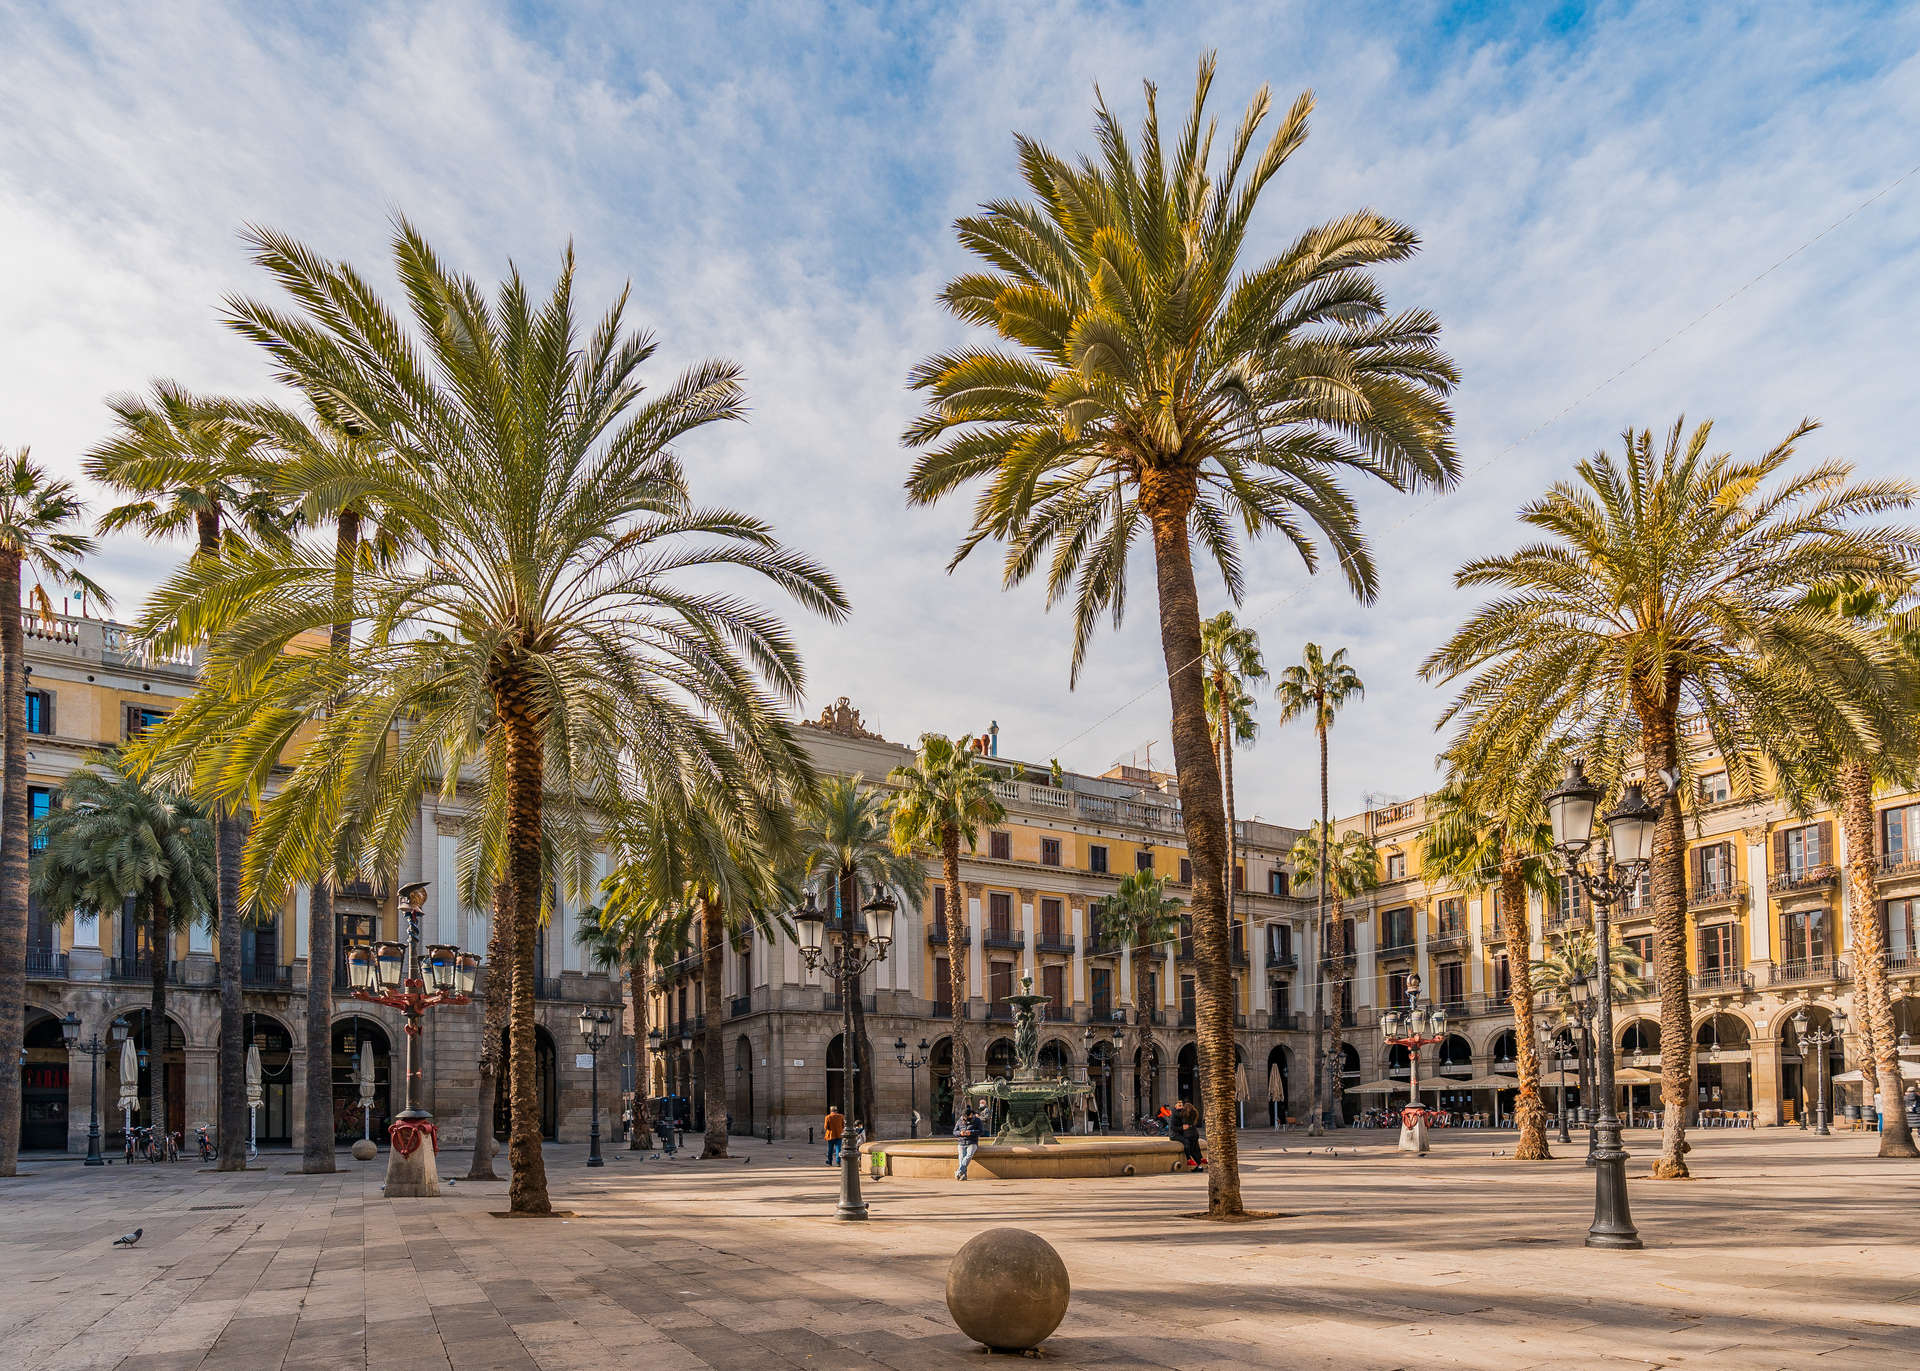 Plaça Reial square (Plaza Real) in Barcelona city center